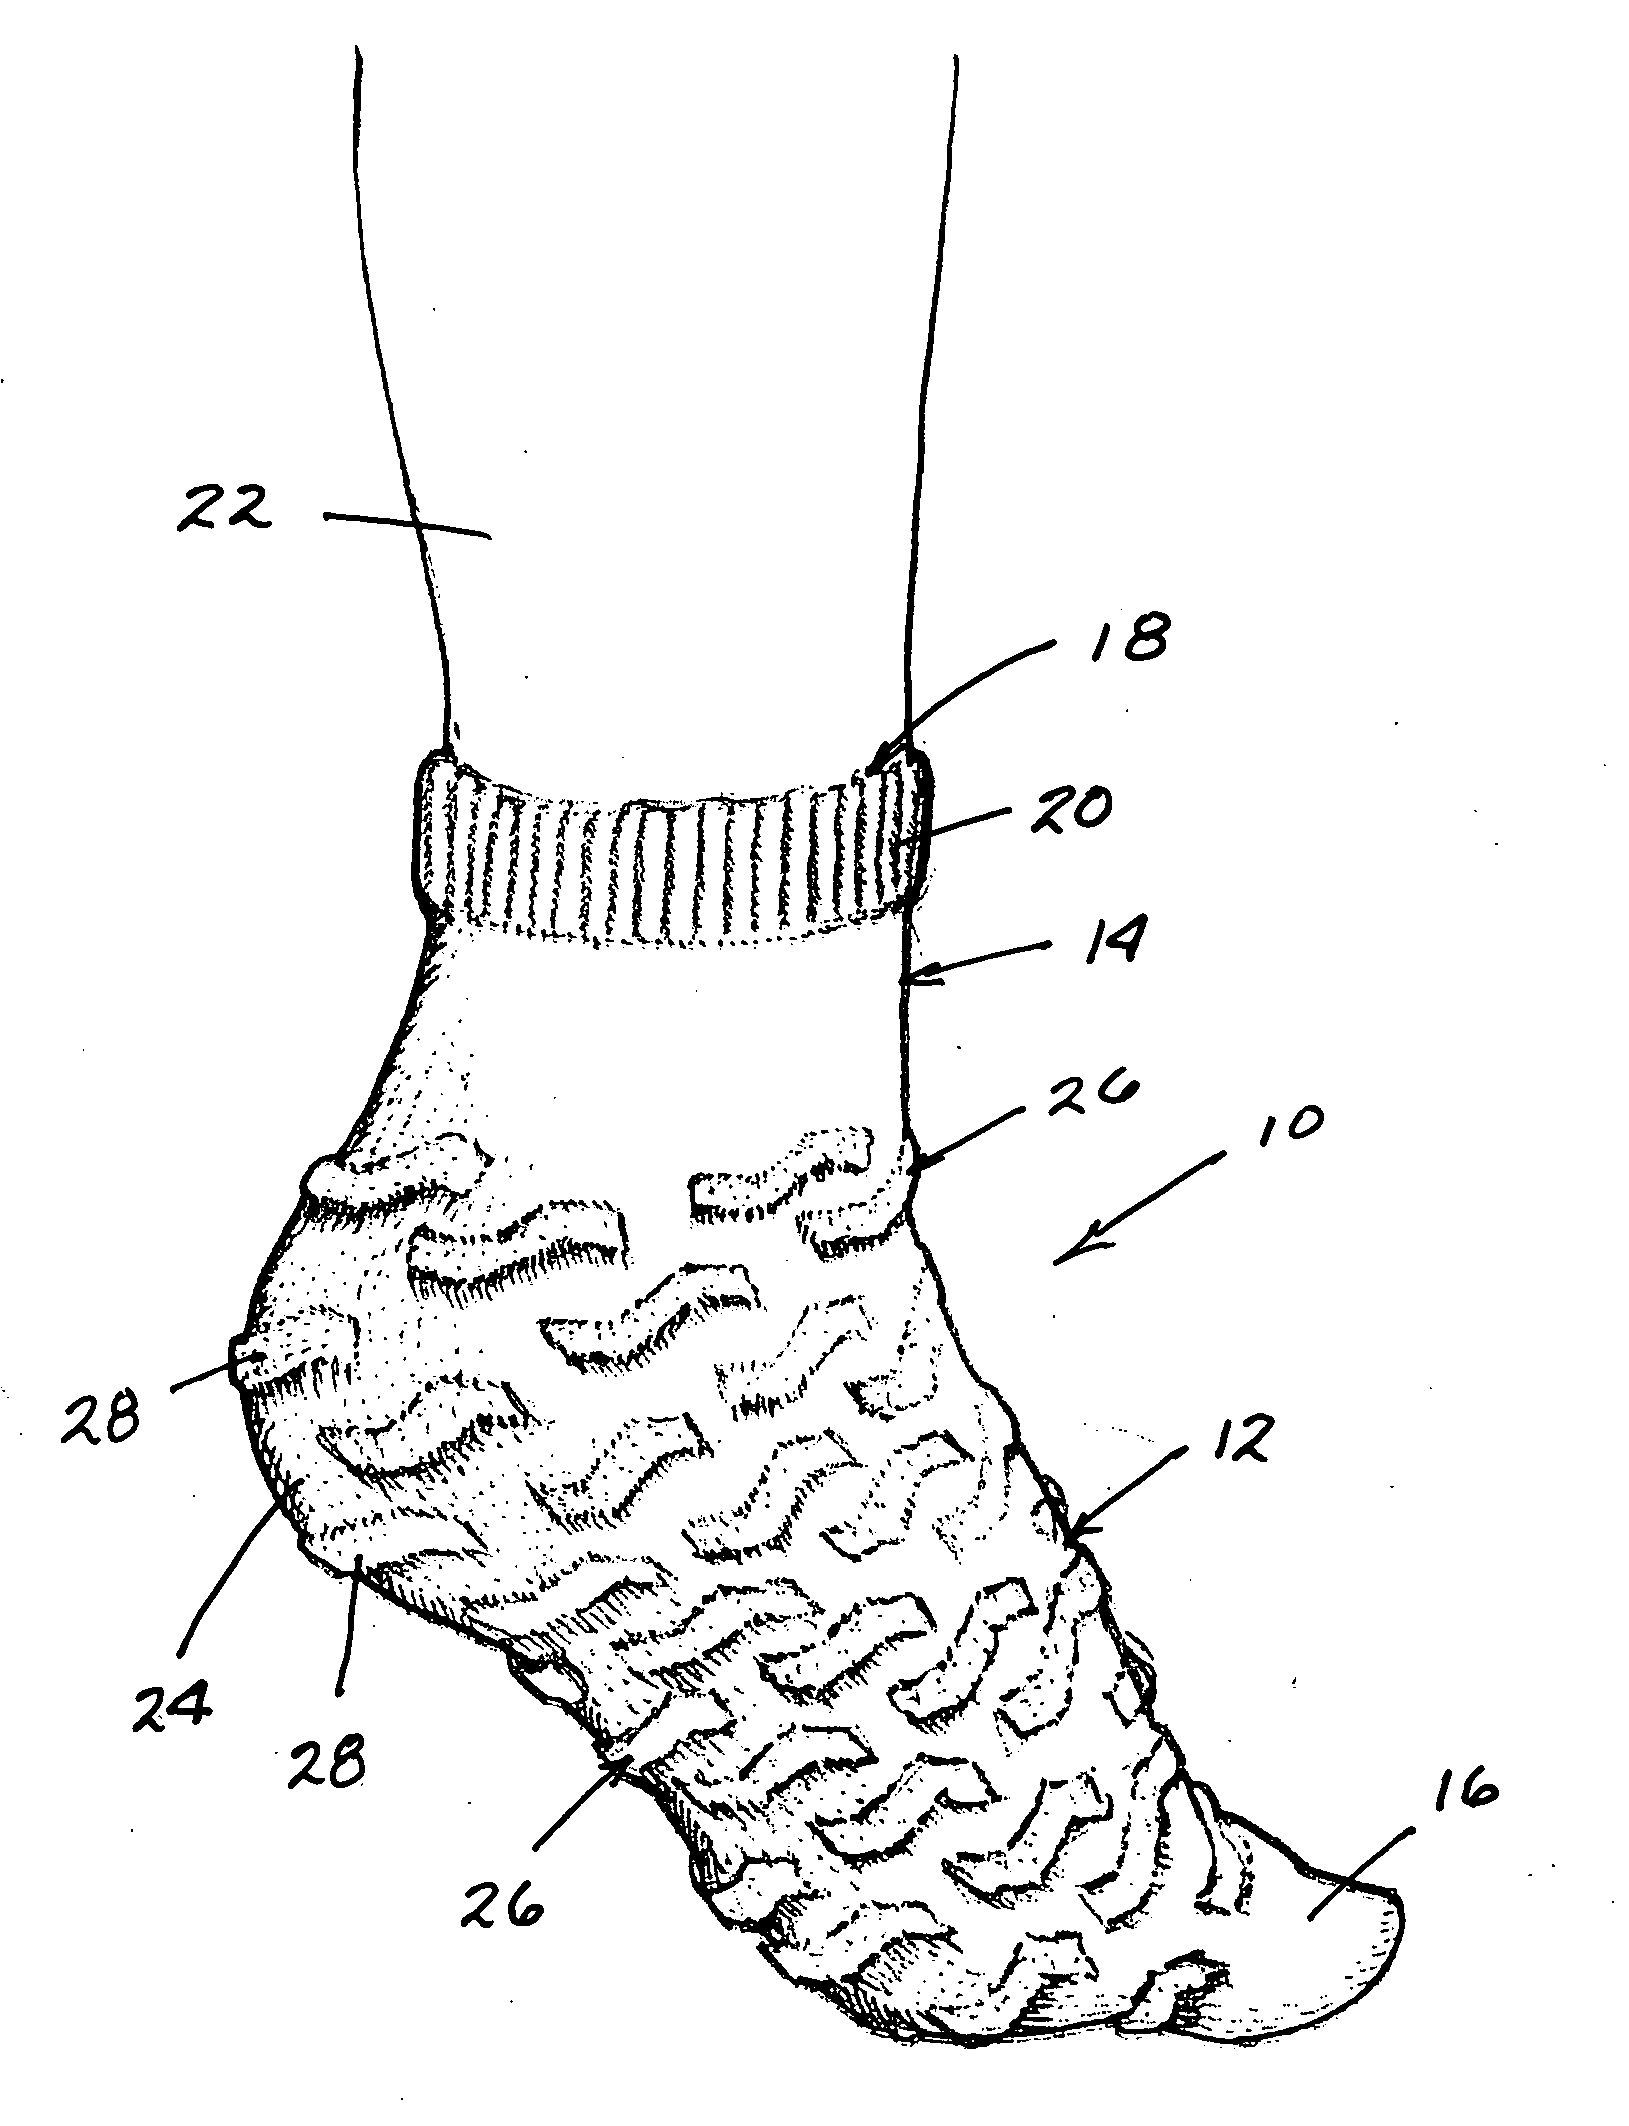 Slip-resistant stocking